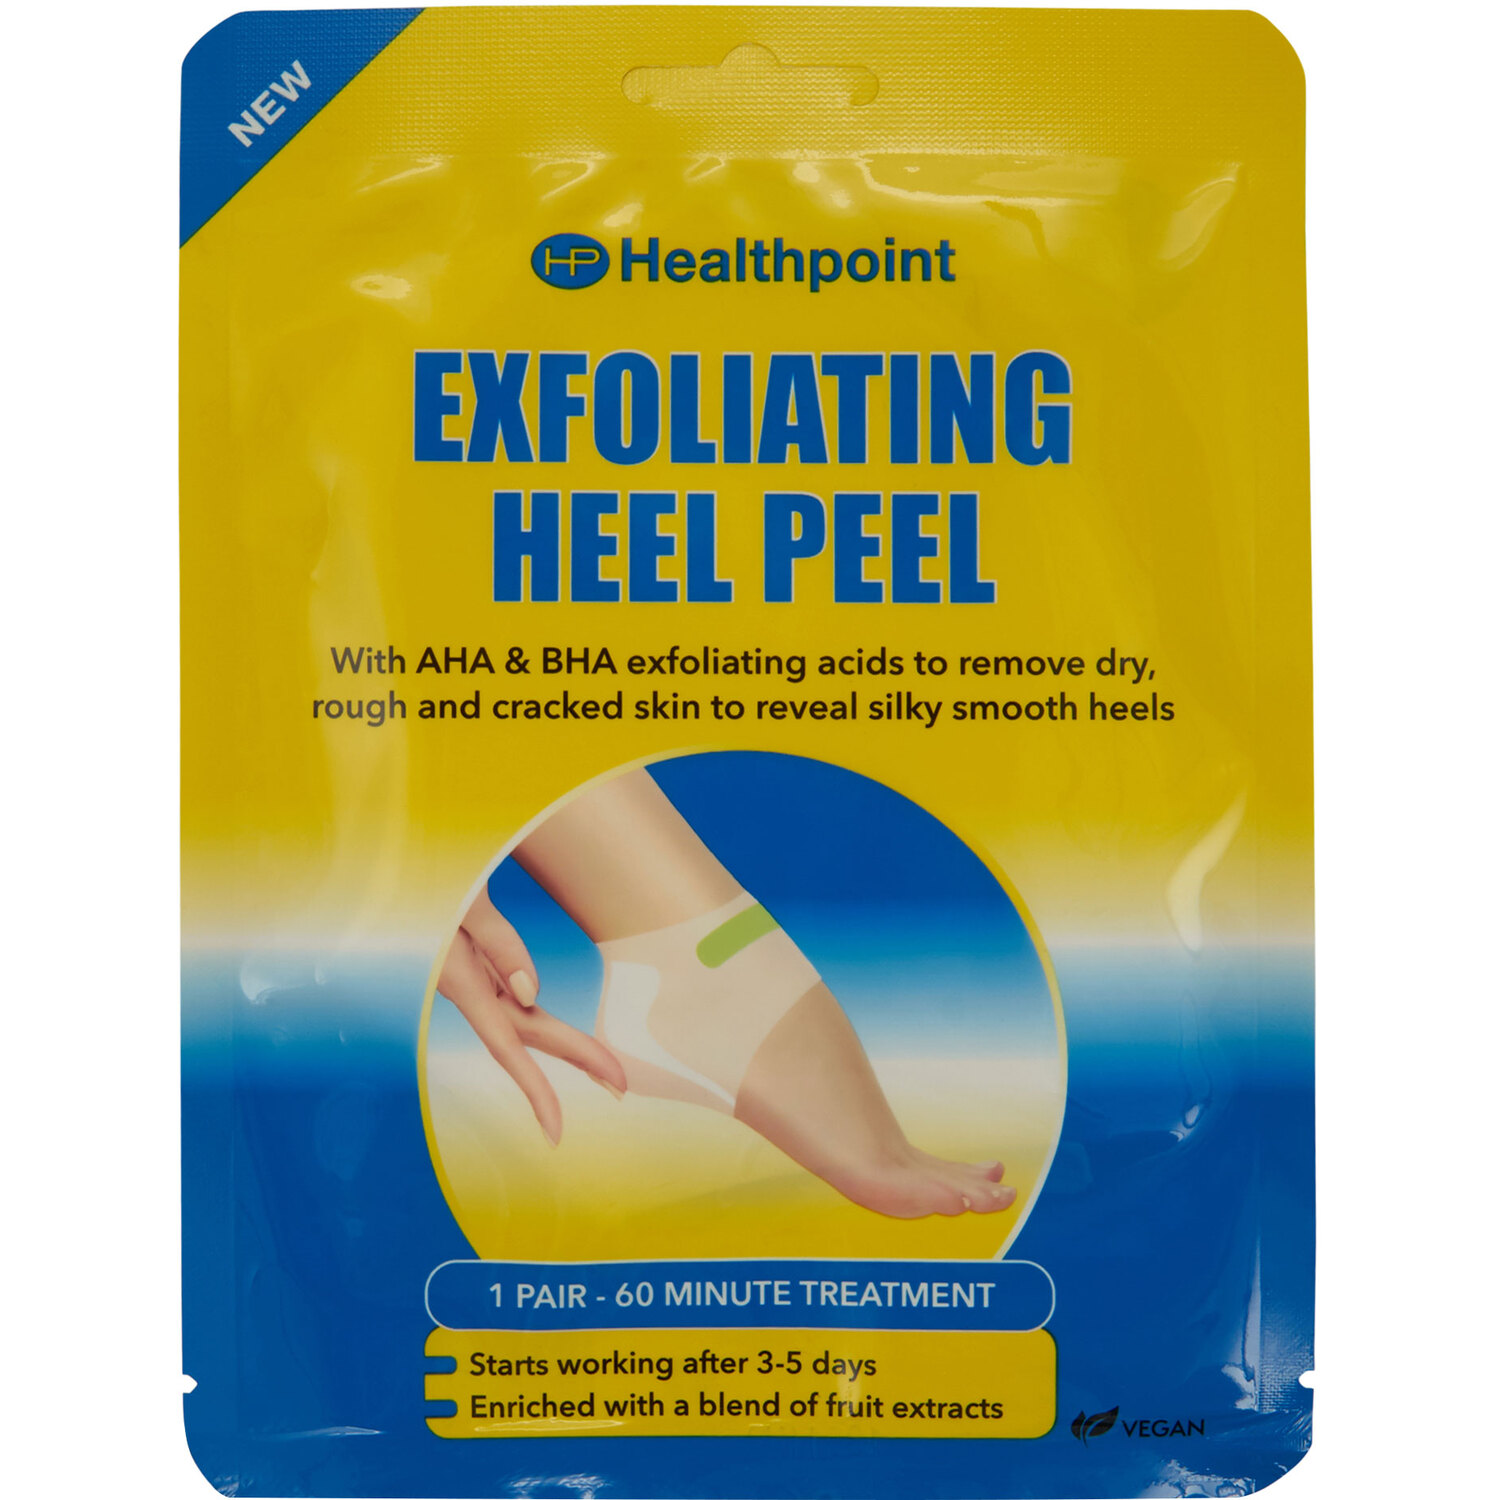 Healthpoint Exfoliating Heel Peel Image 1